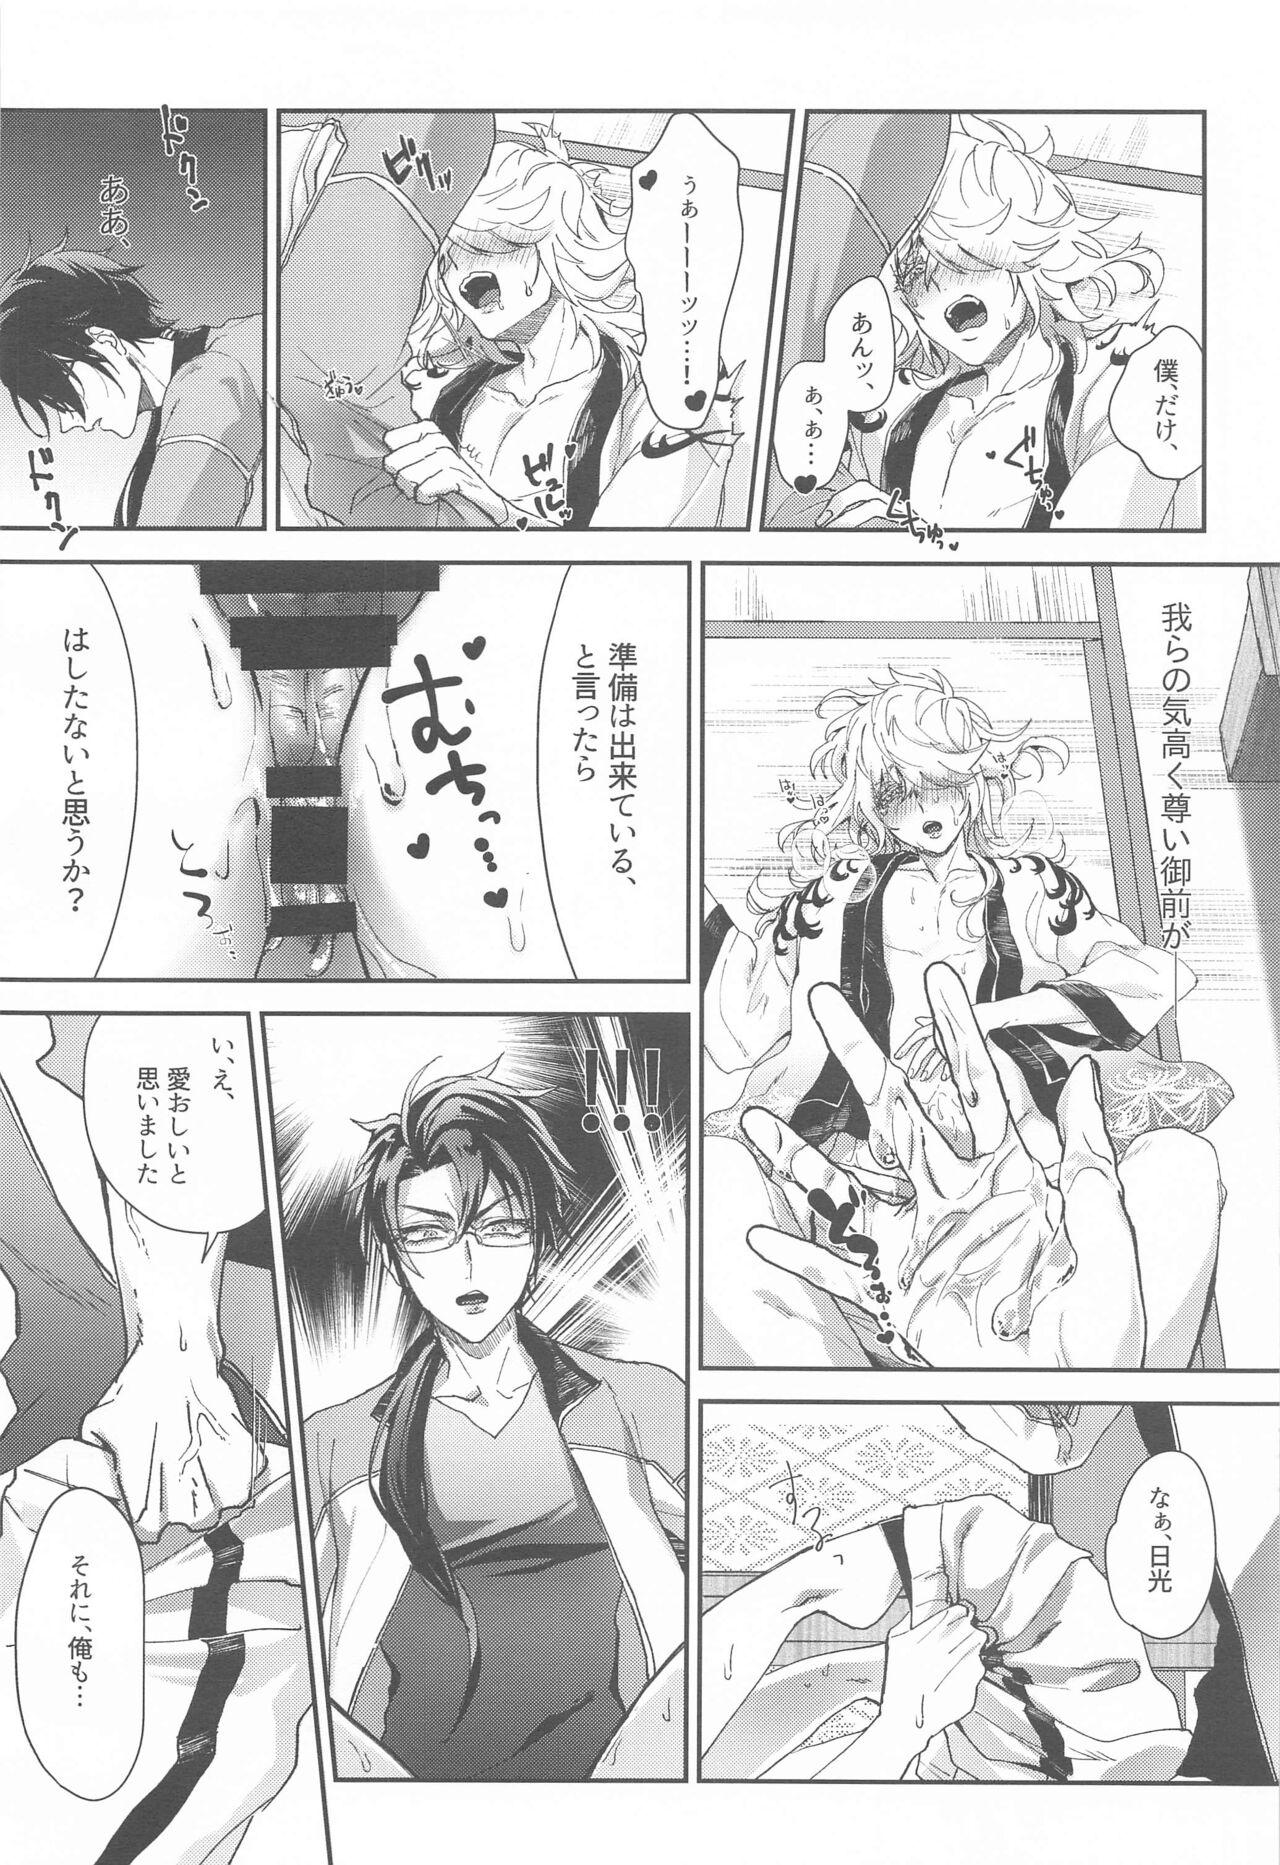 Seduction Ore no Aisuru, - You, my dear - Touken ranbu Cougar - Page 7